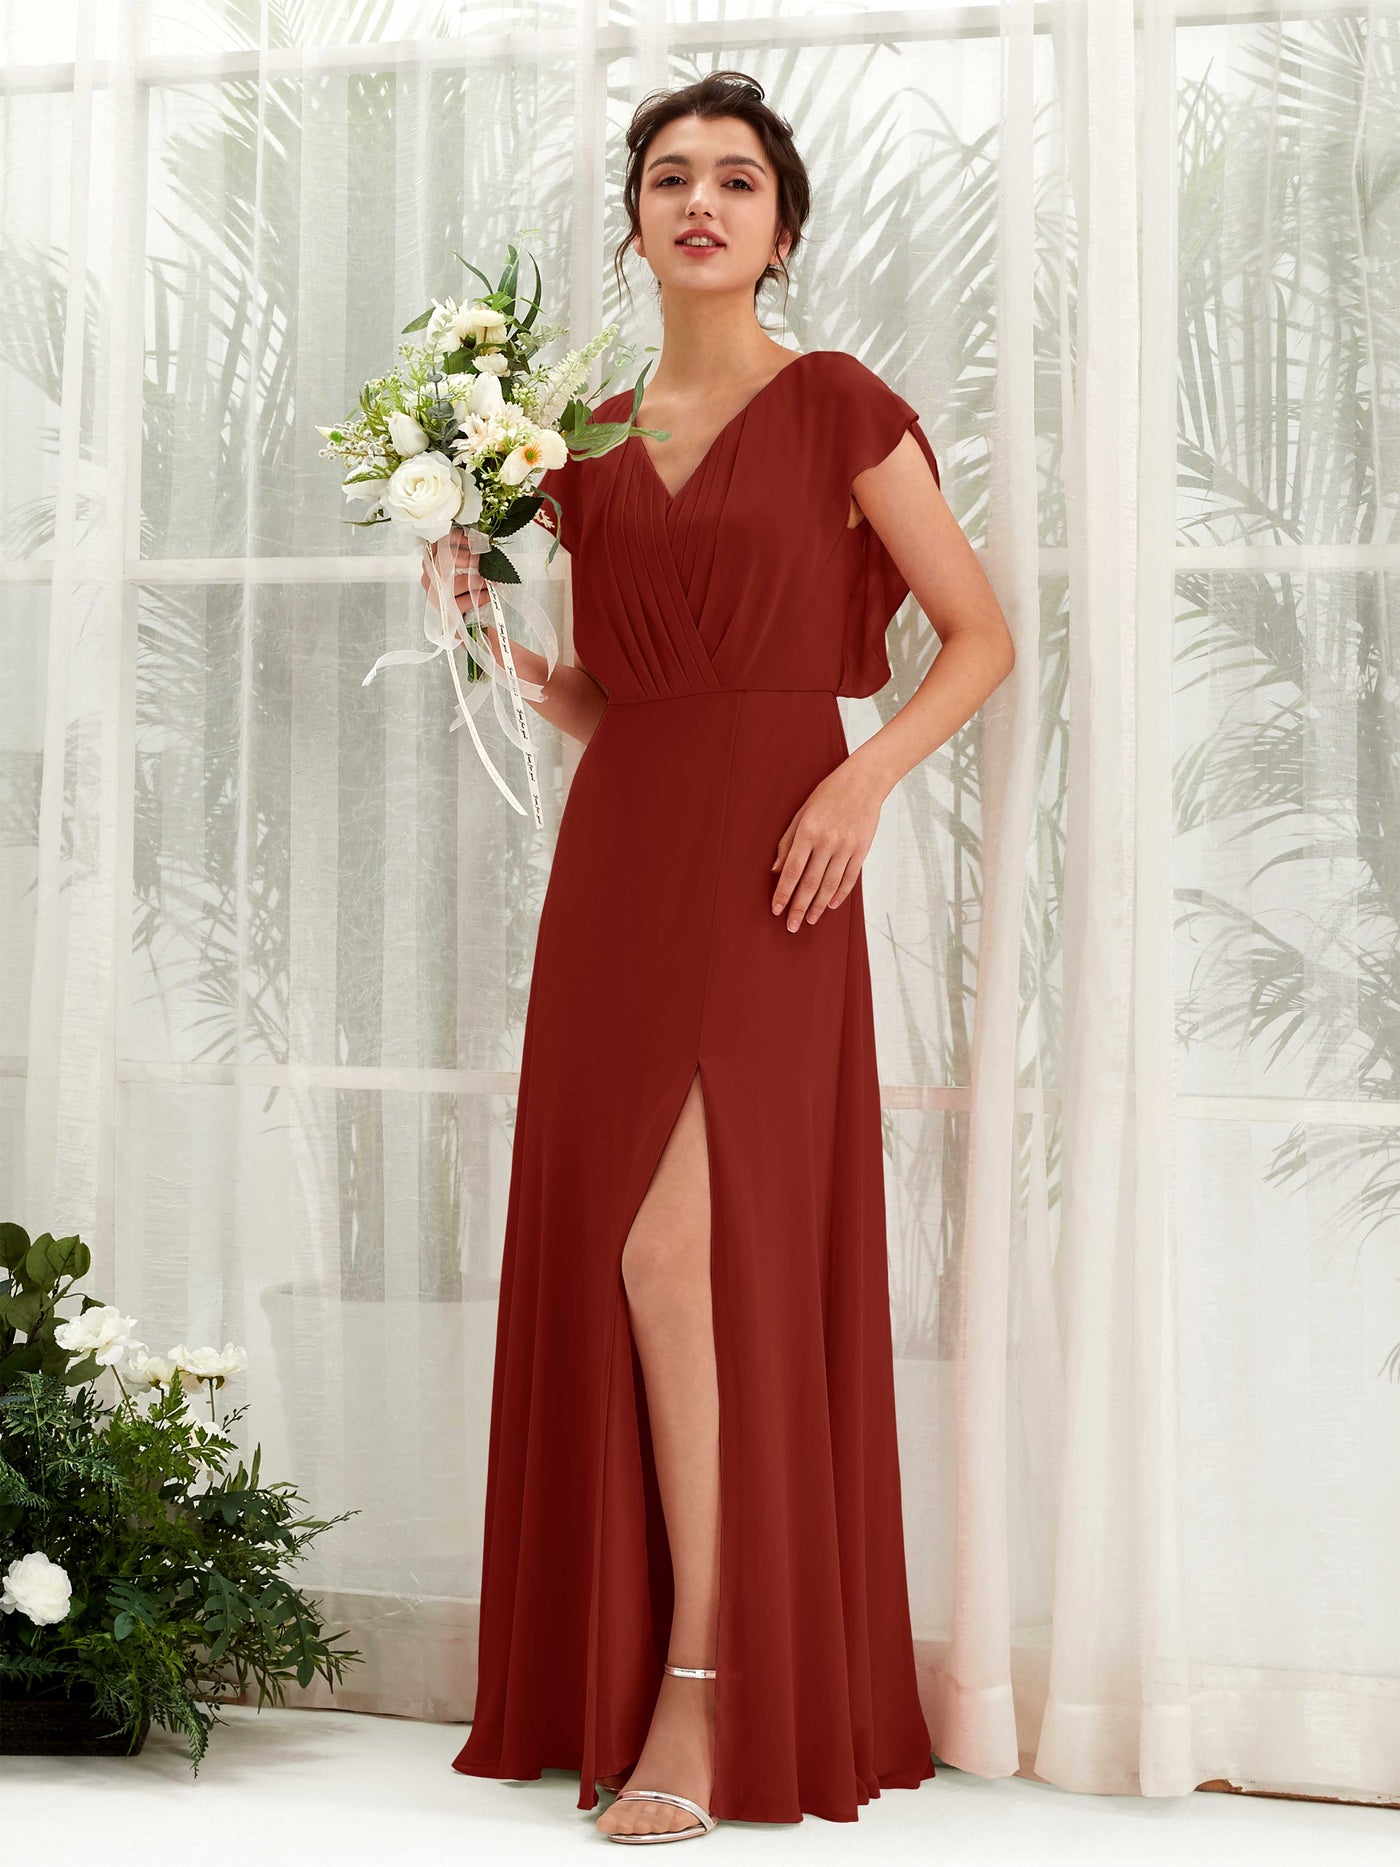 Rust Bridesmaid Dresses Bridesmaid Dress A-line Chiffon V-neck Full Length Short Sleeves Wedding Party Dress (81225619)#color_rust